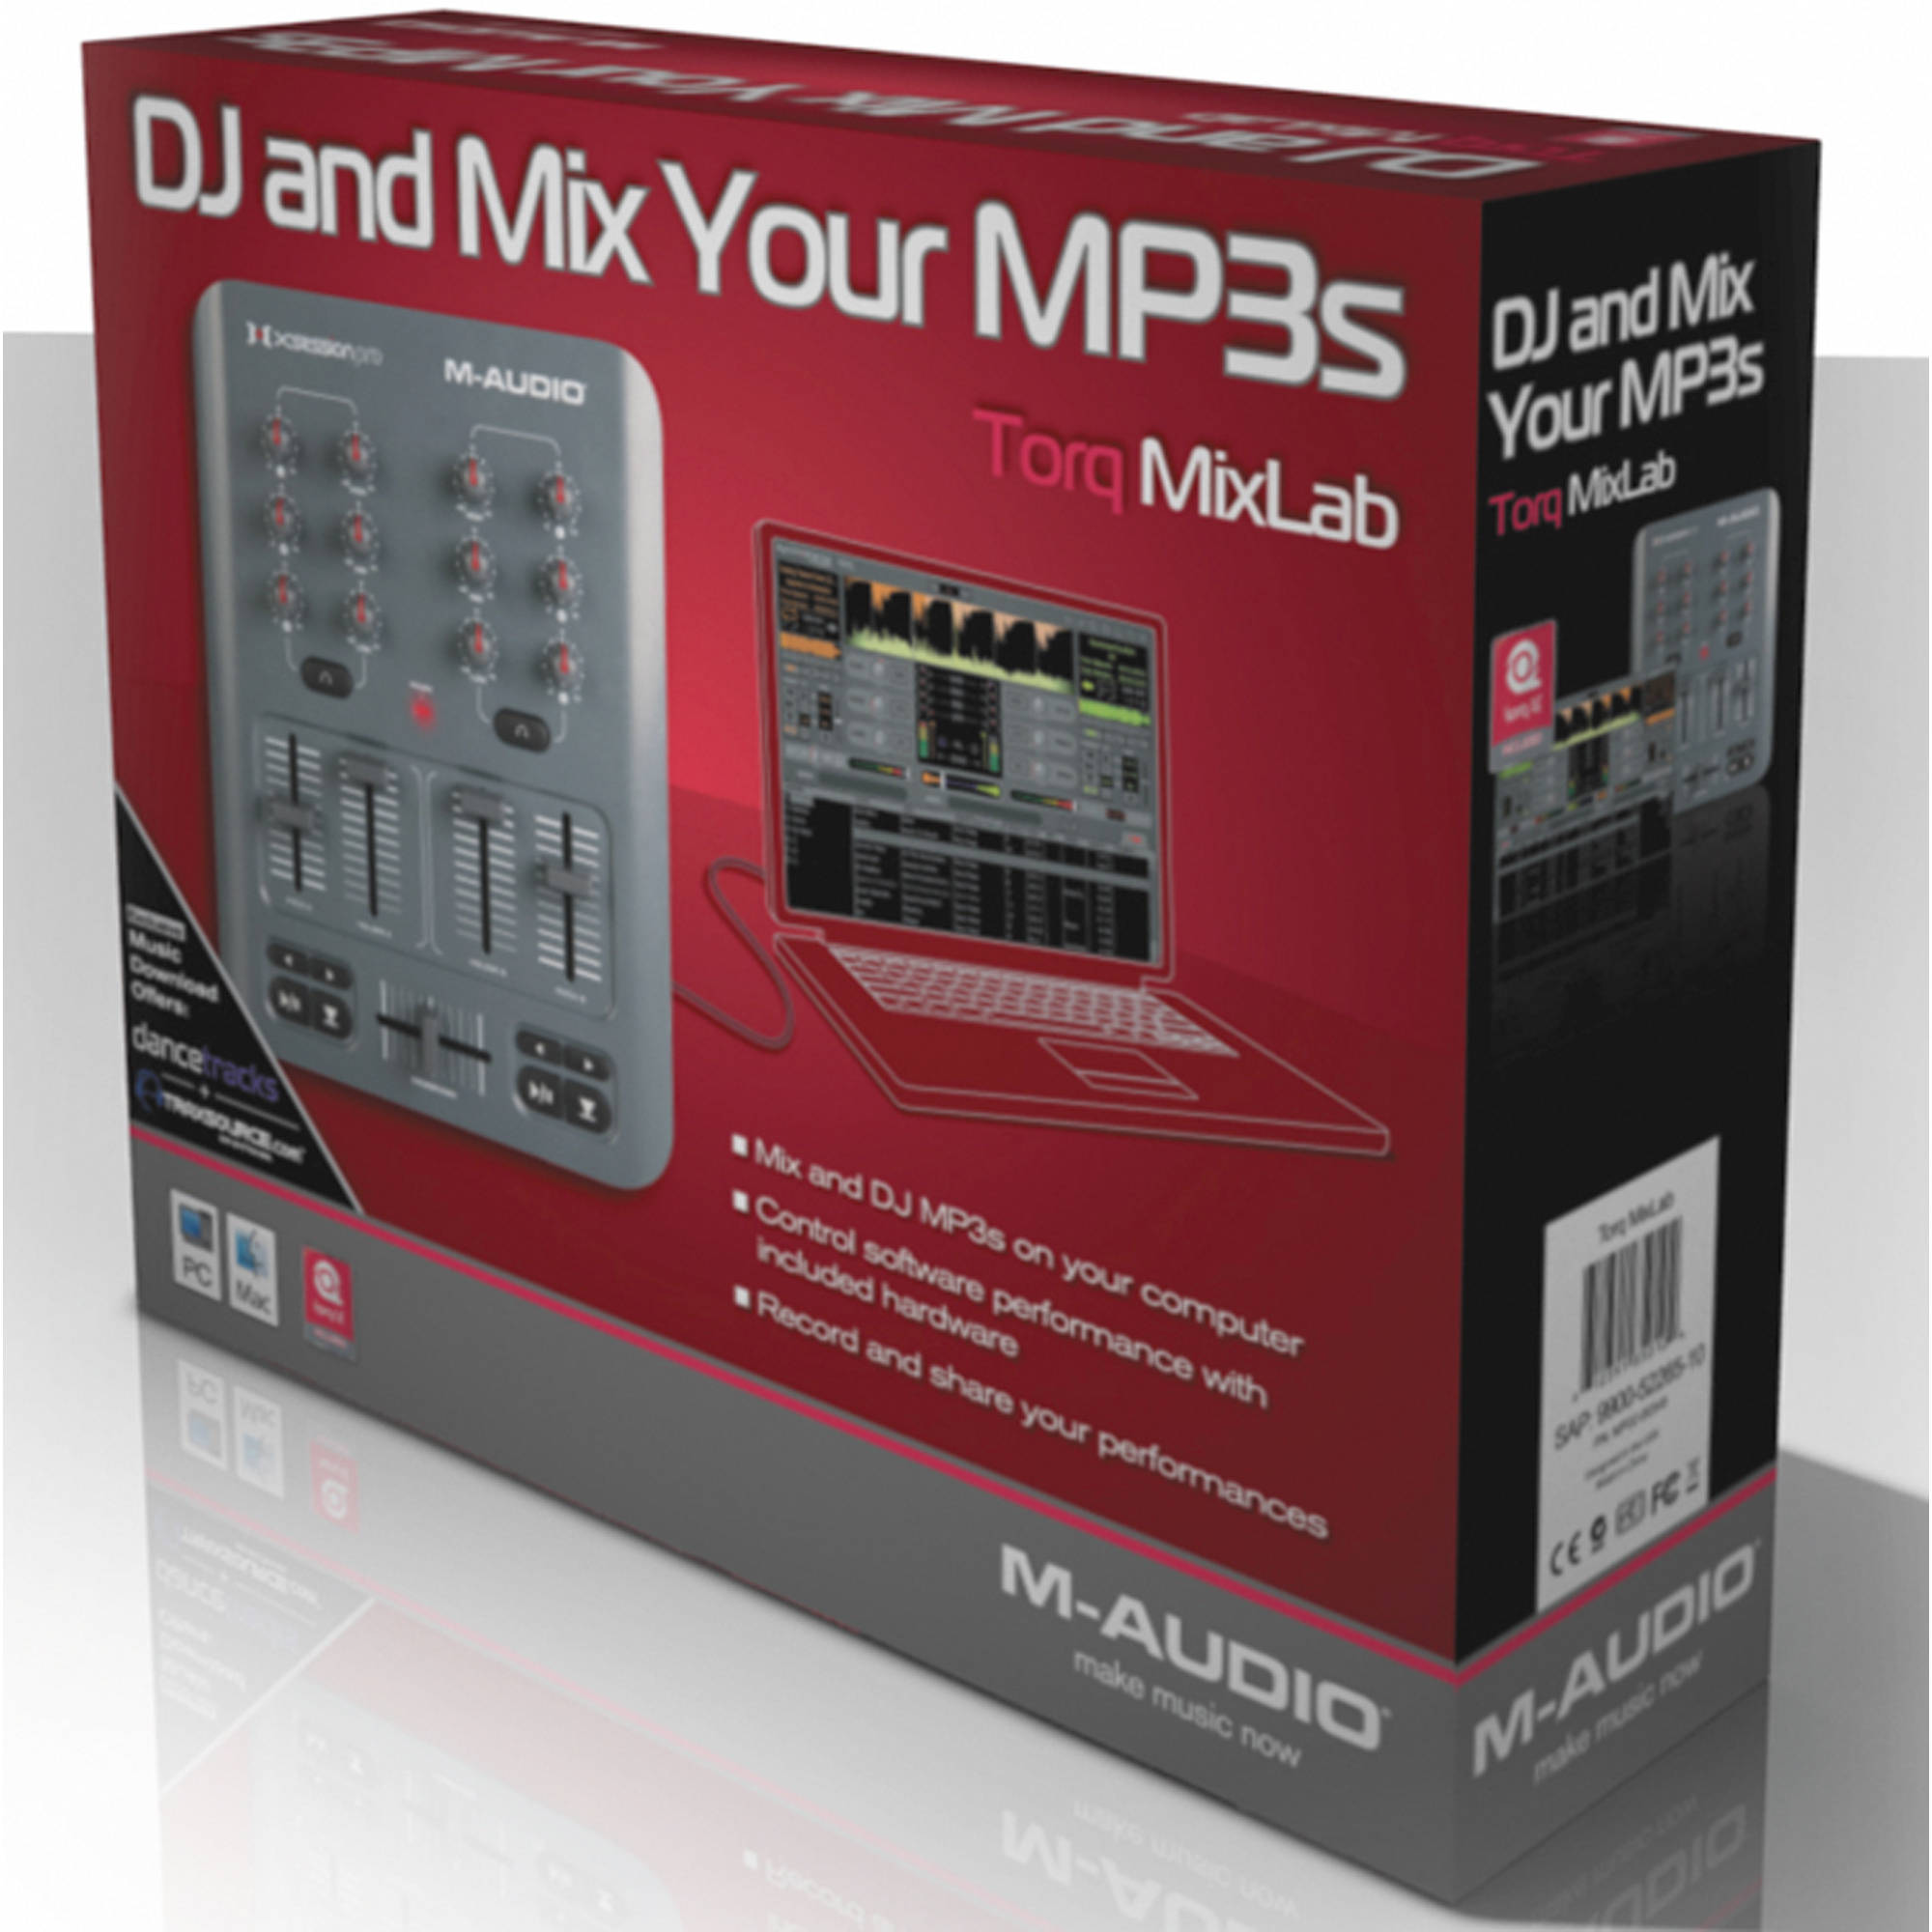 m-audio torq mixlab software